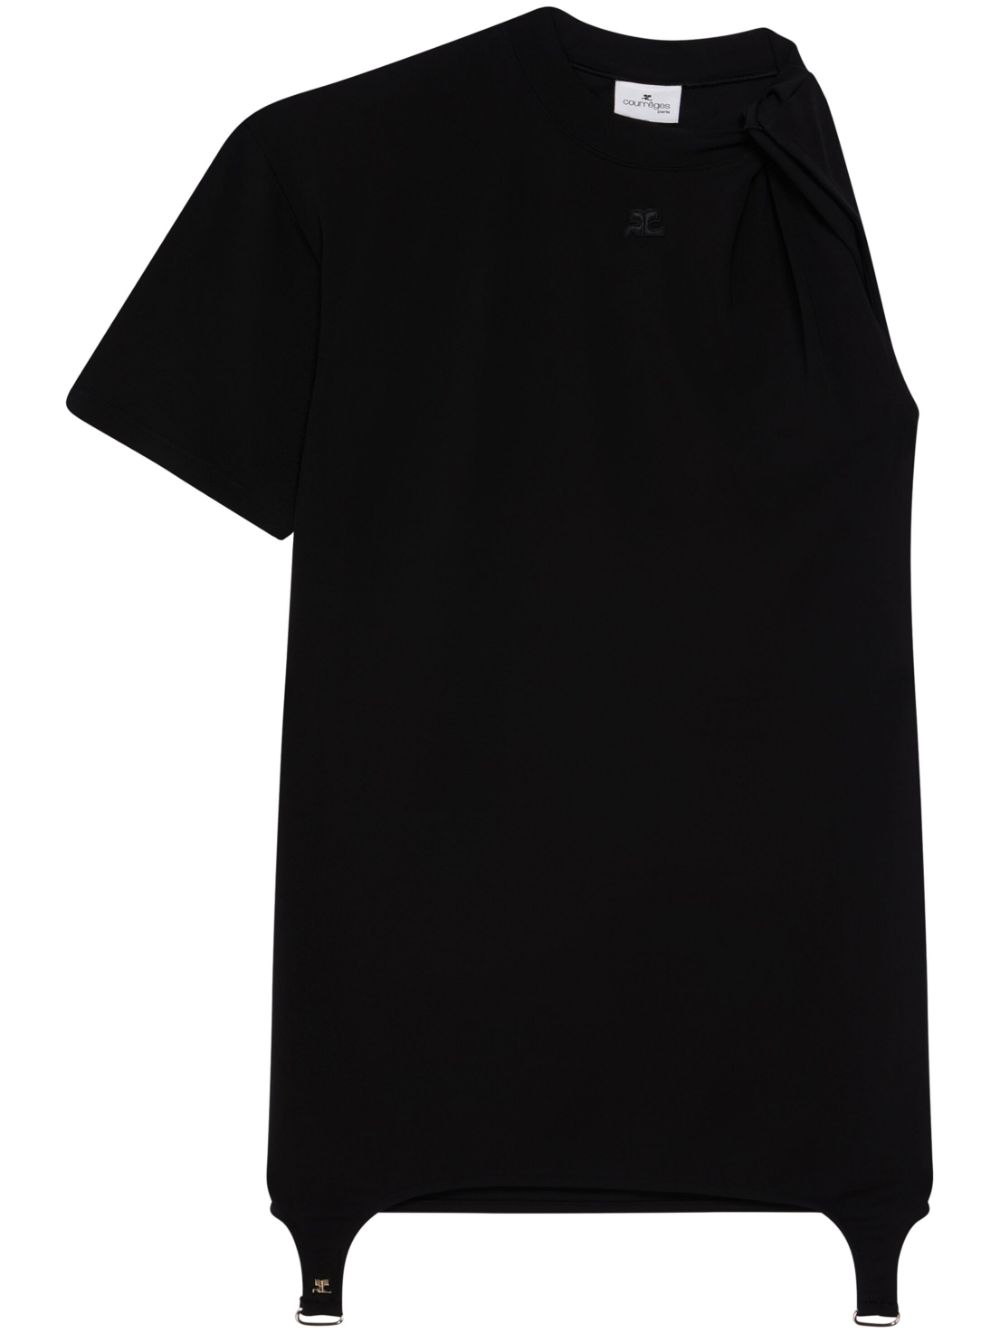 COURREGÈS Sleek and Chic Short-Sleeve Black Dress for Women